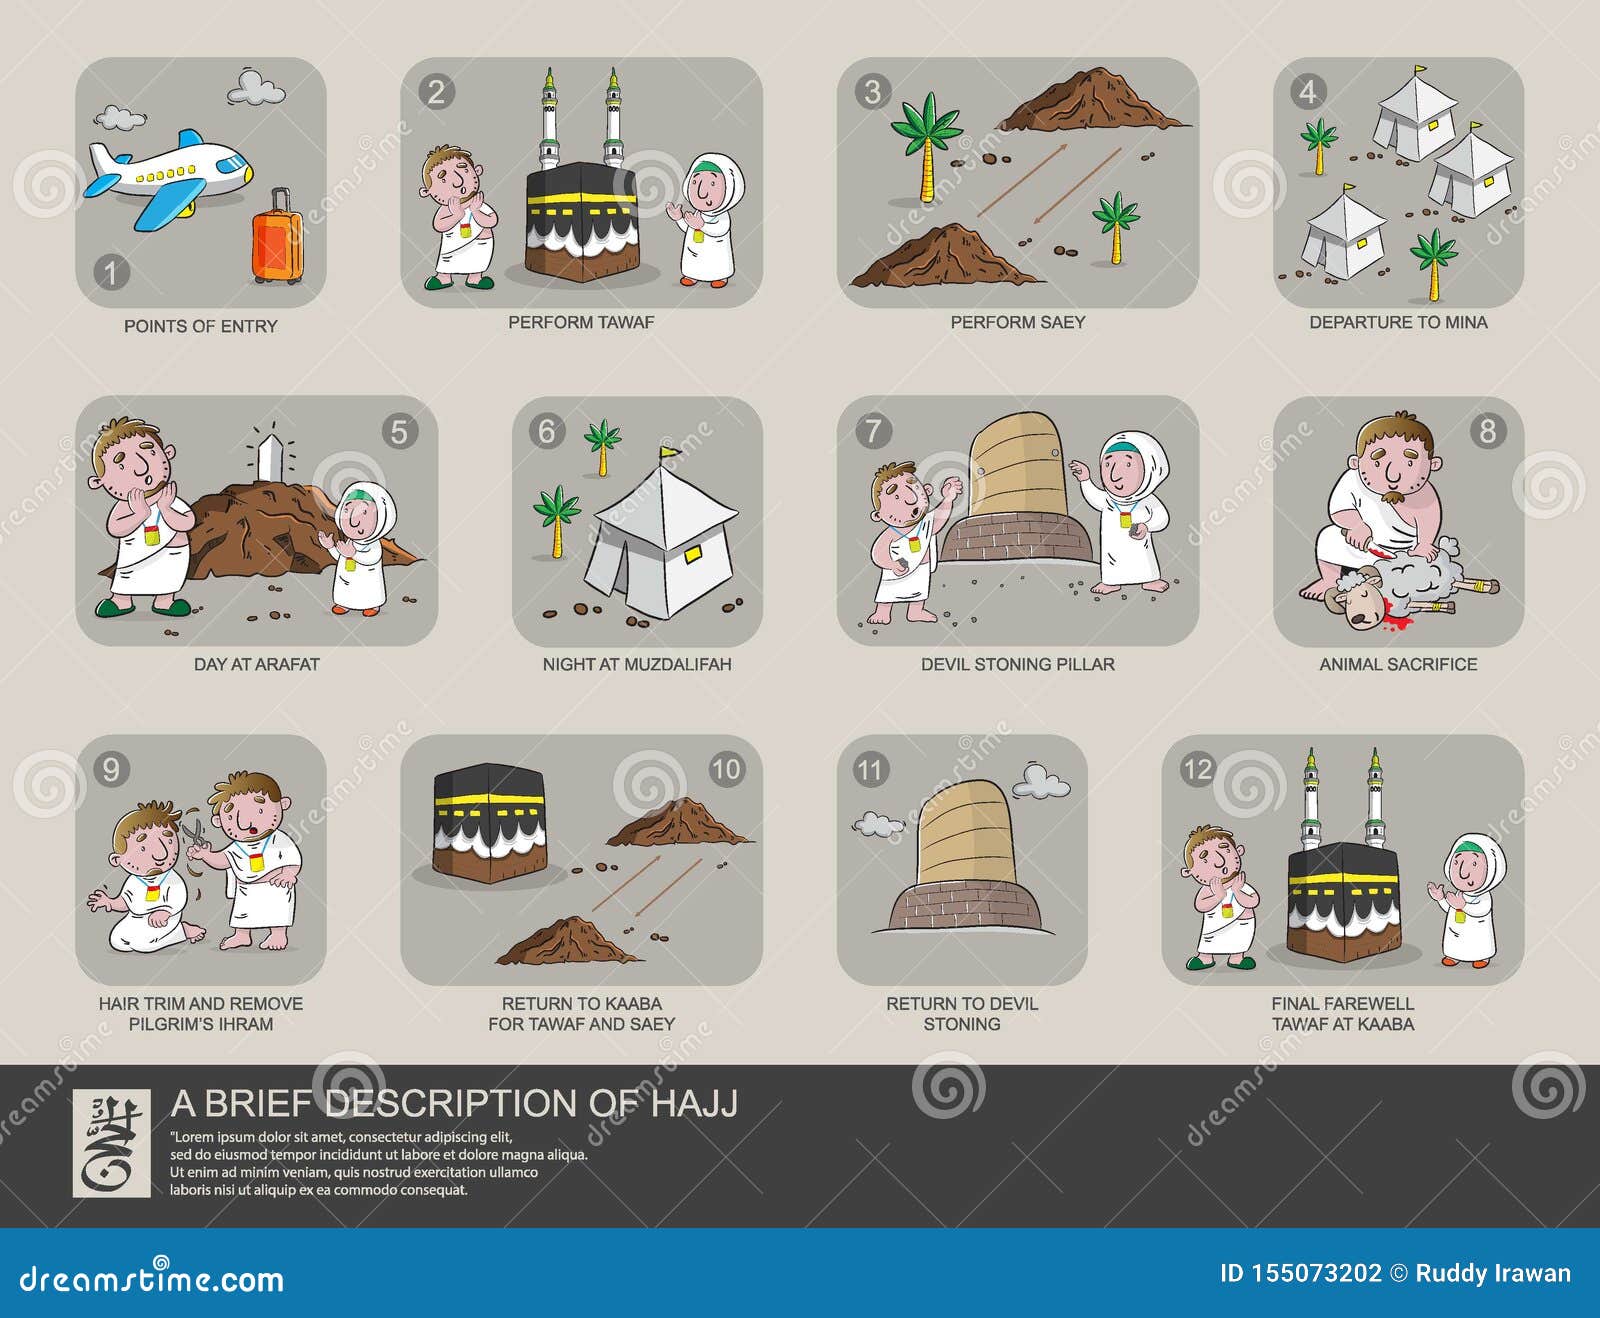 brief description of hajj